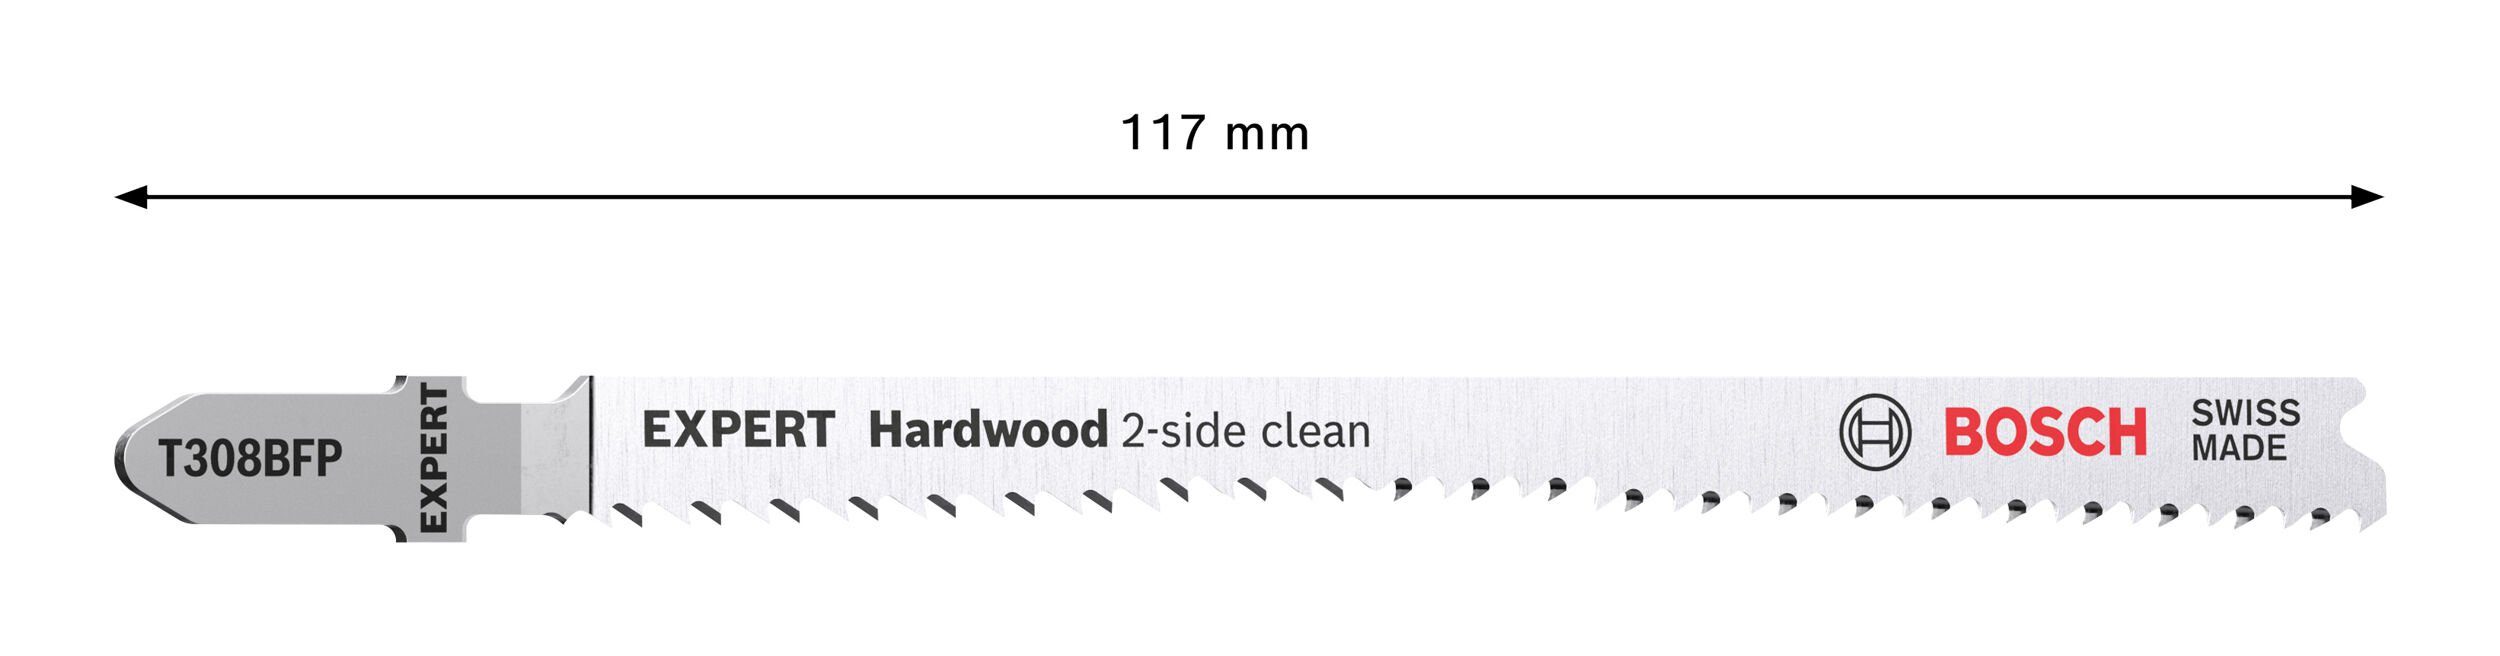 Hardwood 2-side BFP 3er-Pack Expert Expert 308 for Wood Stück), (3 - T BOSCH Precision Stichsägeblatt